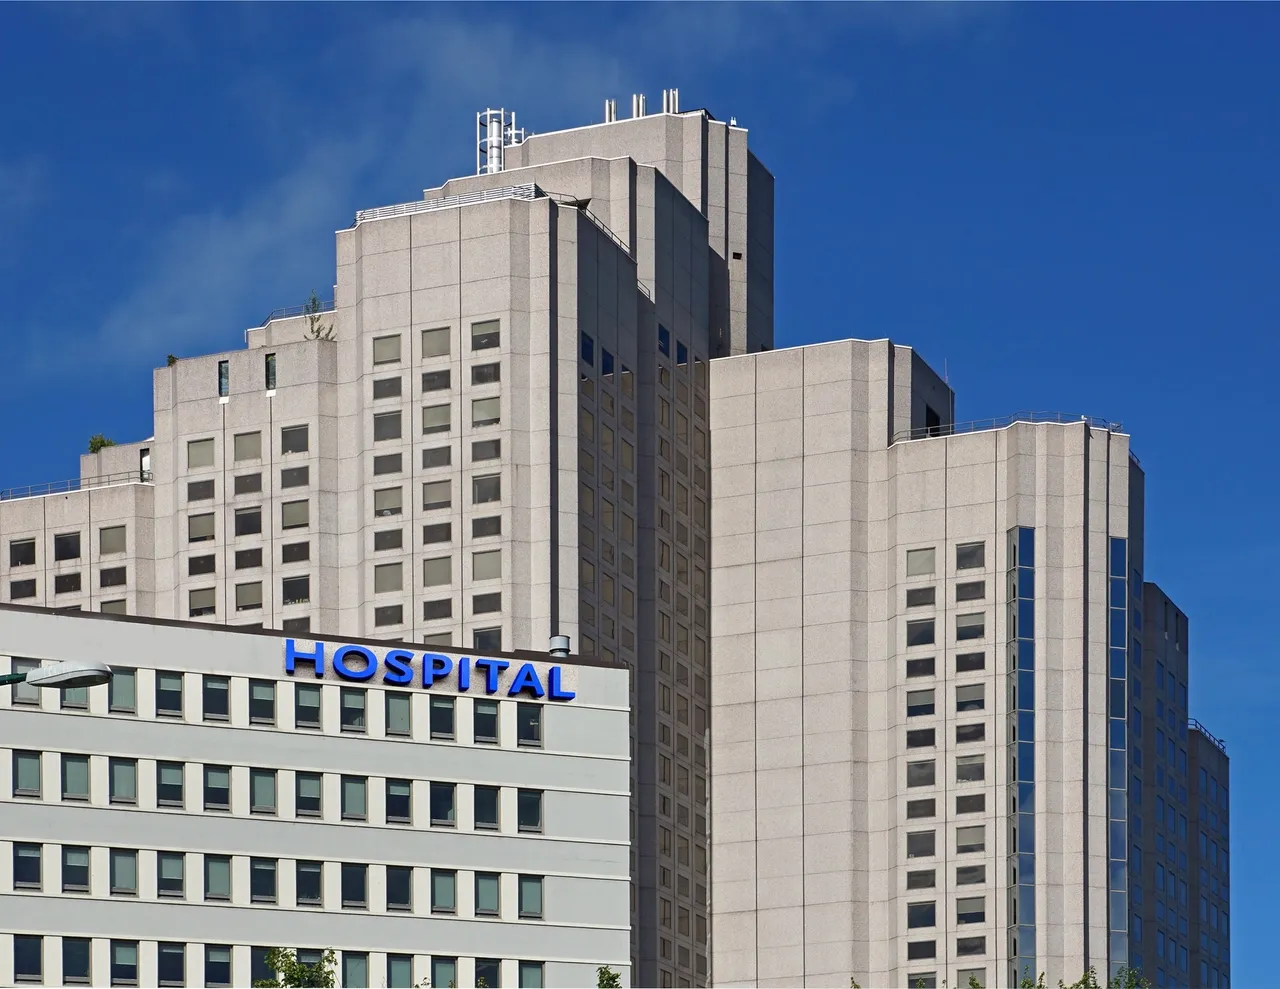 Hospital building against blue sky